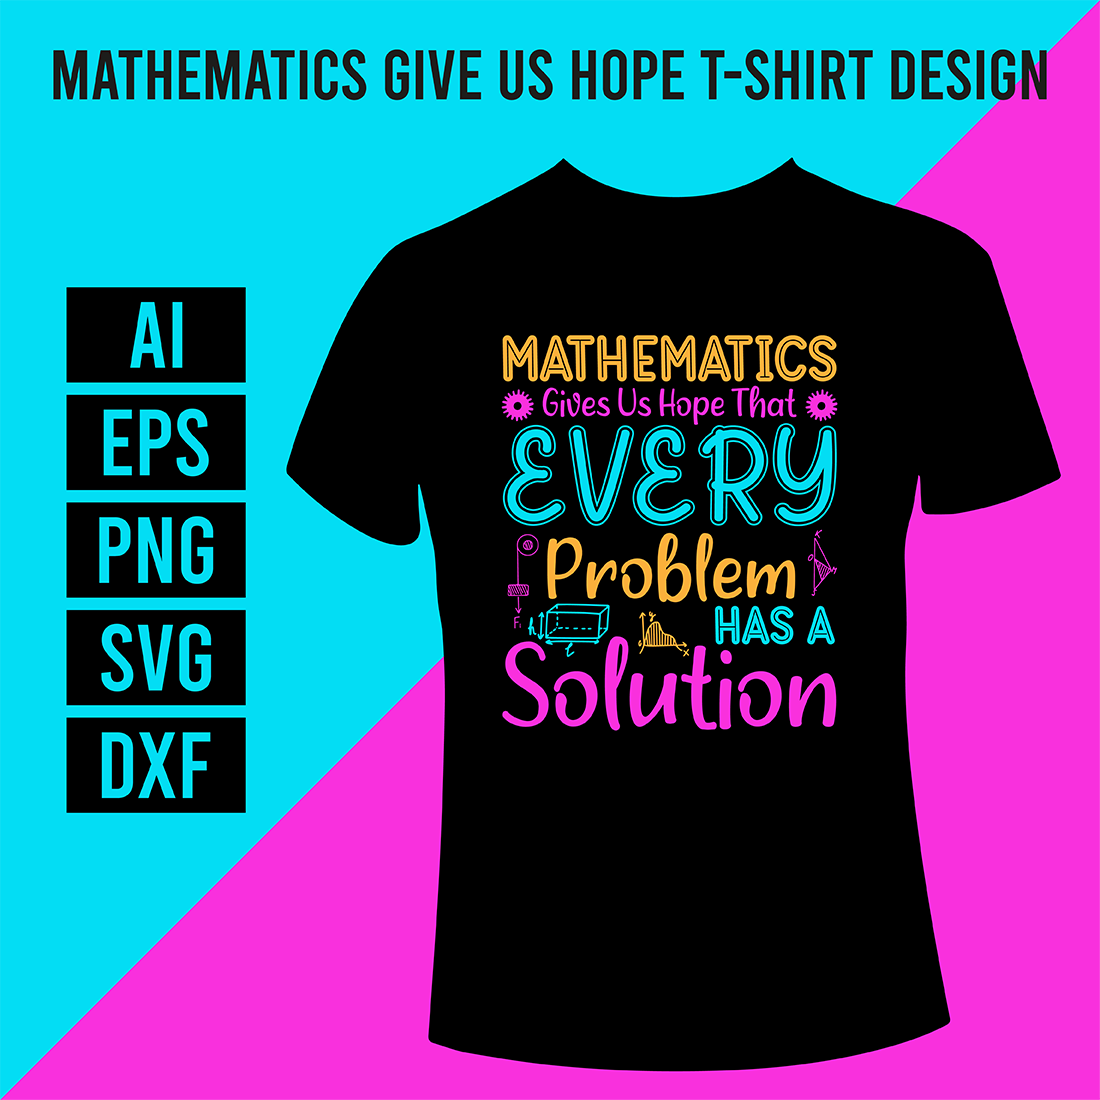 Mathematics Give Us Hope T-Shirt Design main cover.